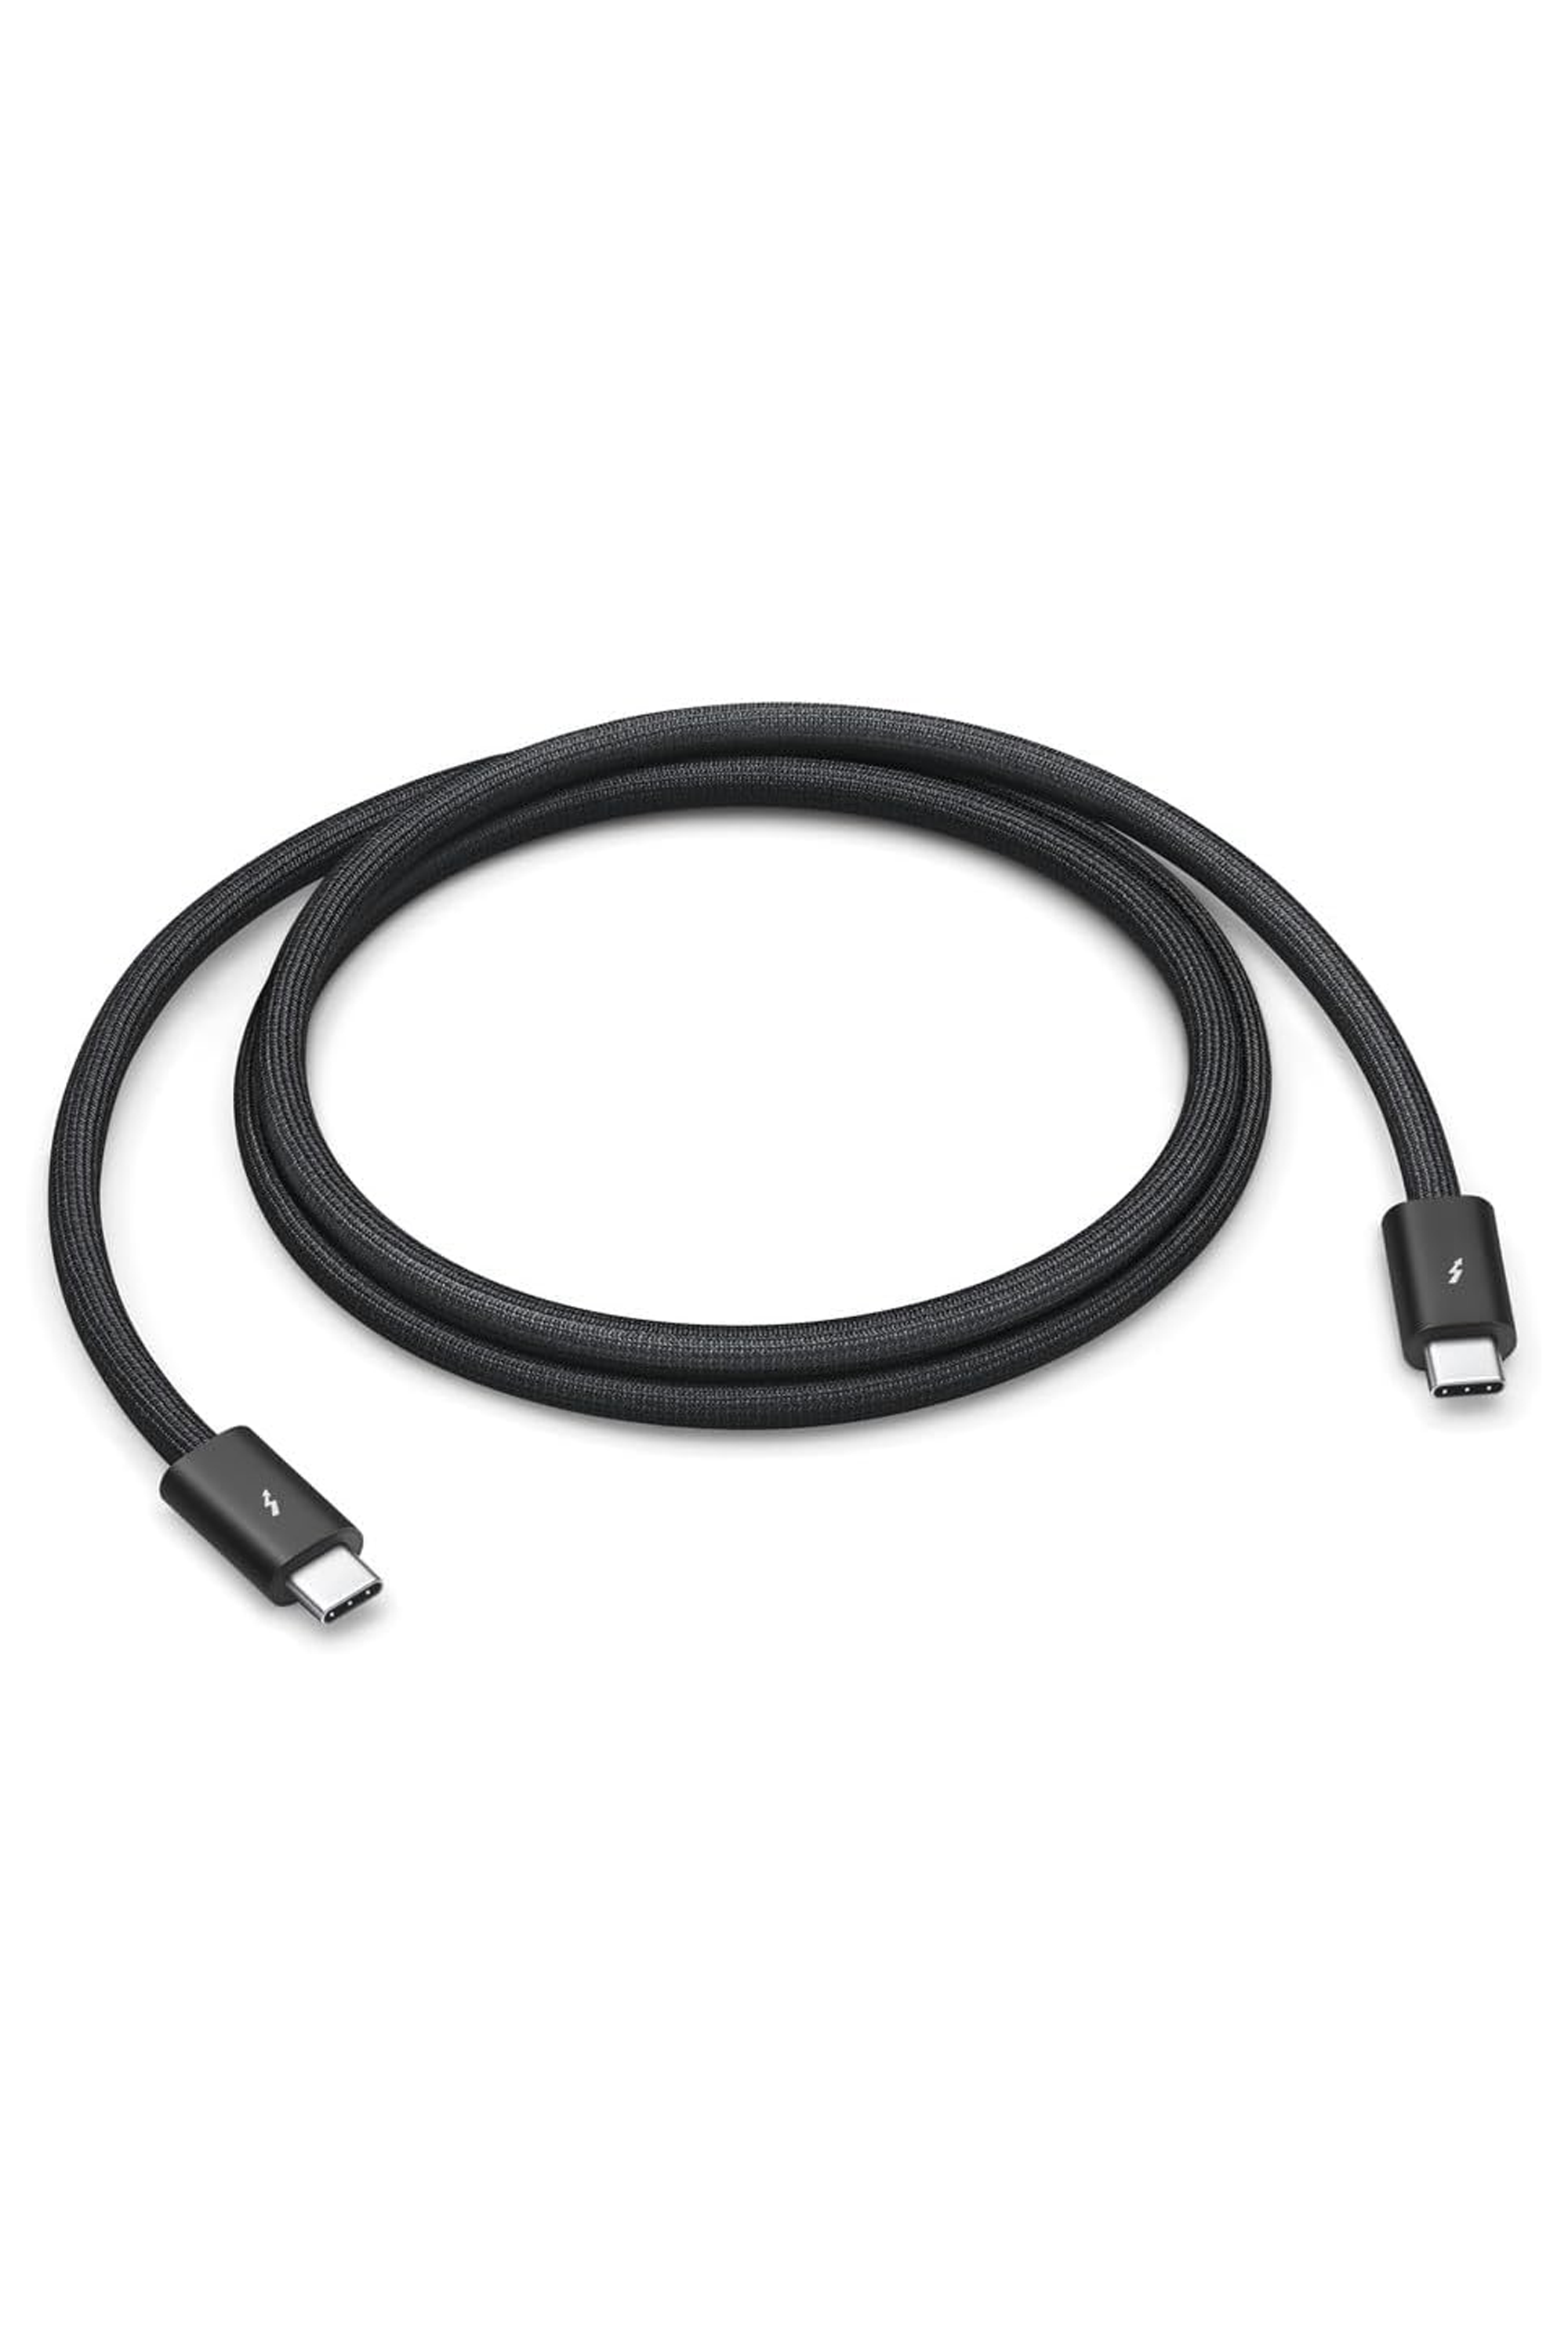 Apple Thunderbolt 4 USB-C Pro Cable